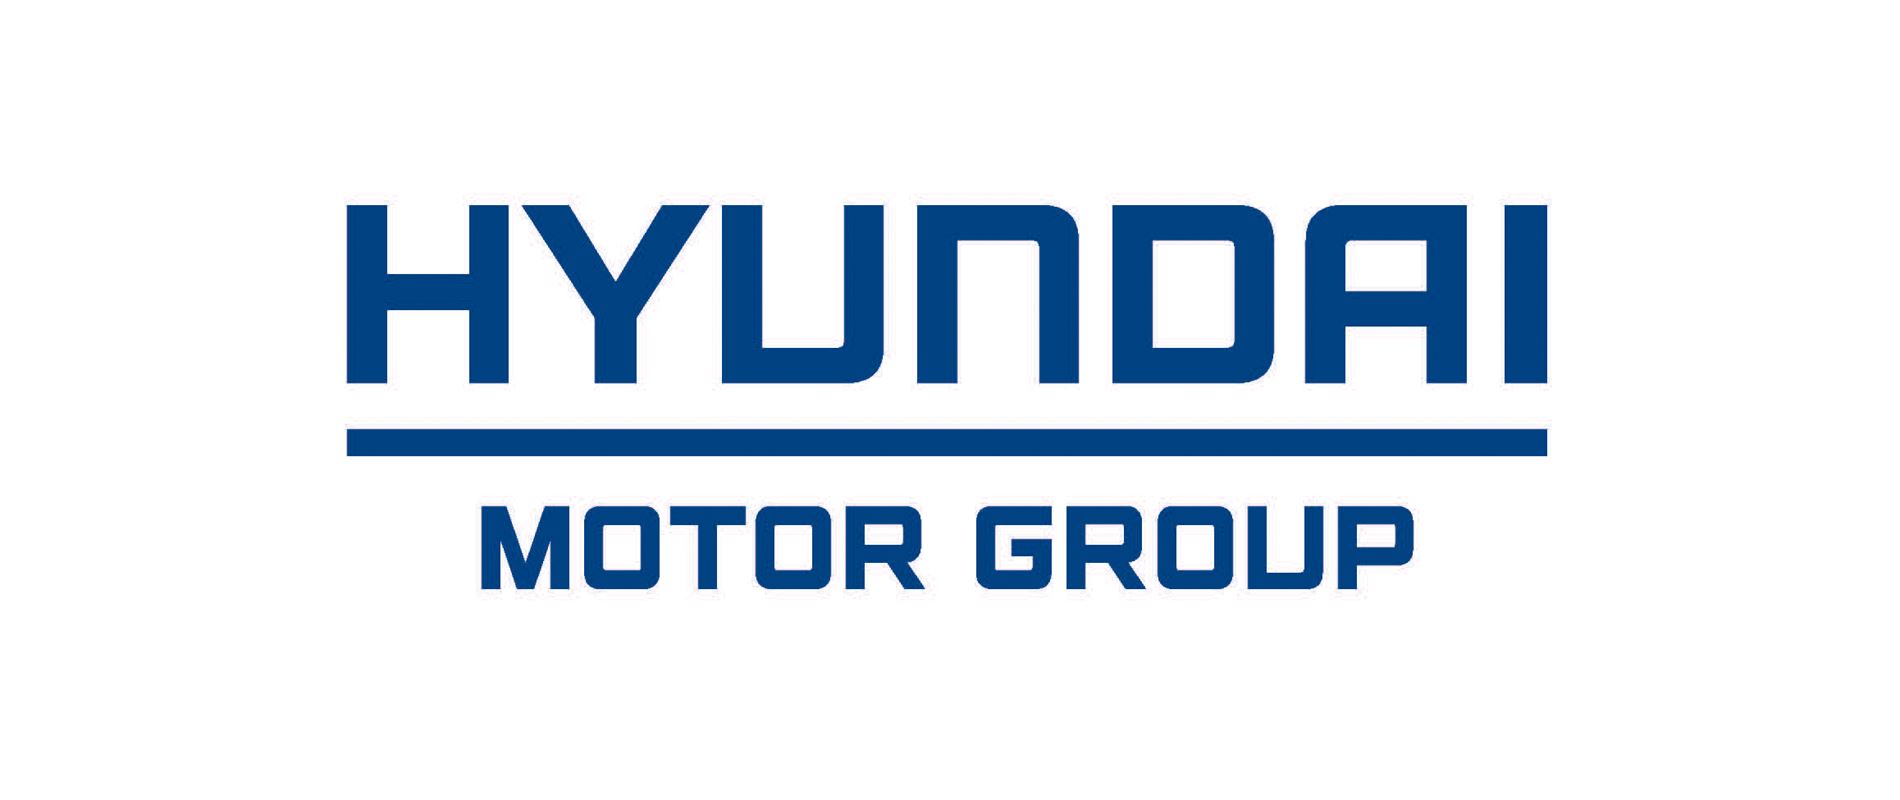 Hyundai Motor Group Toray Group Team Up to Shape New Era of Mobility through Material Innovation